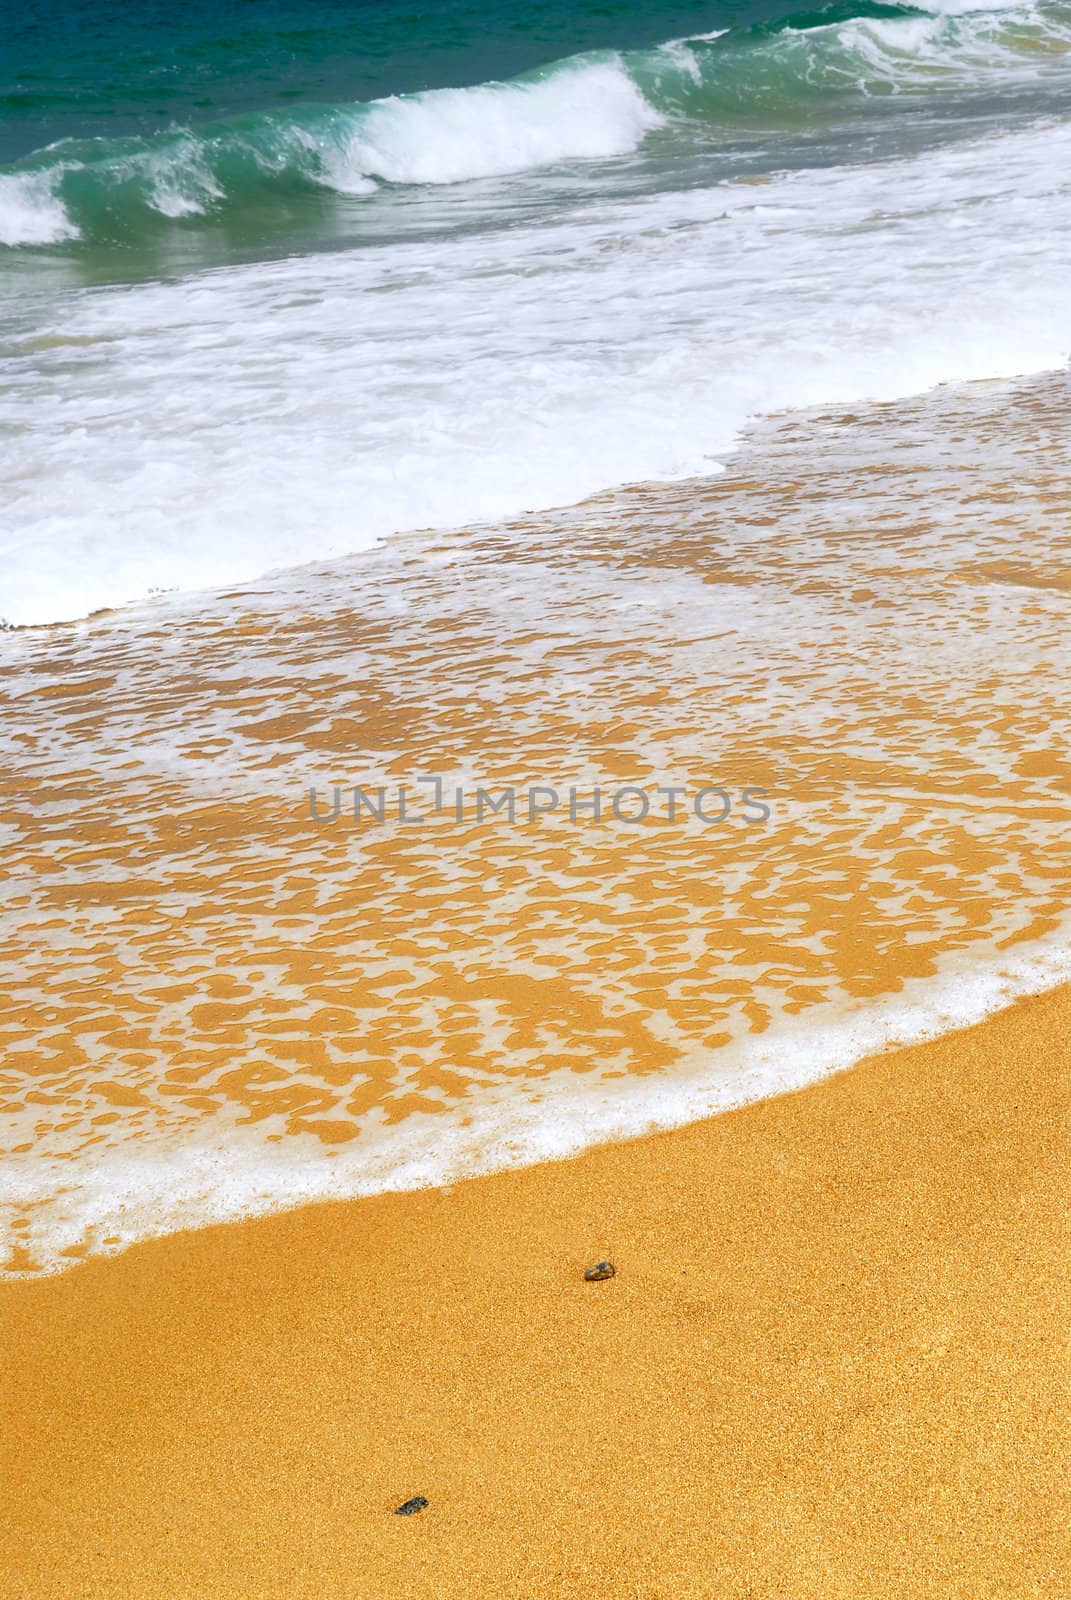 Ocean wave advancing on a yellow sandy beach